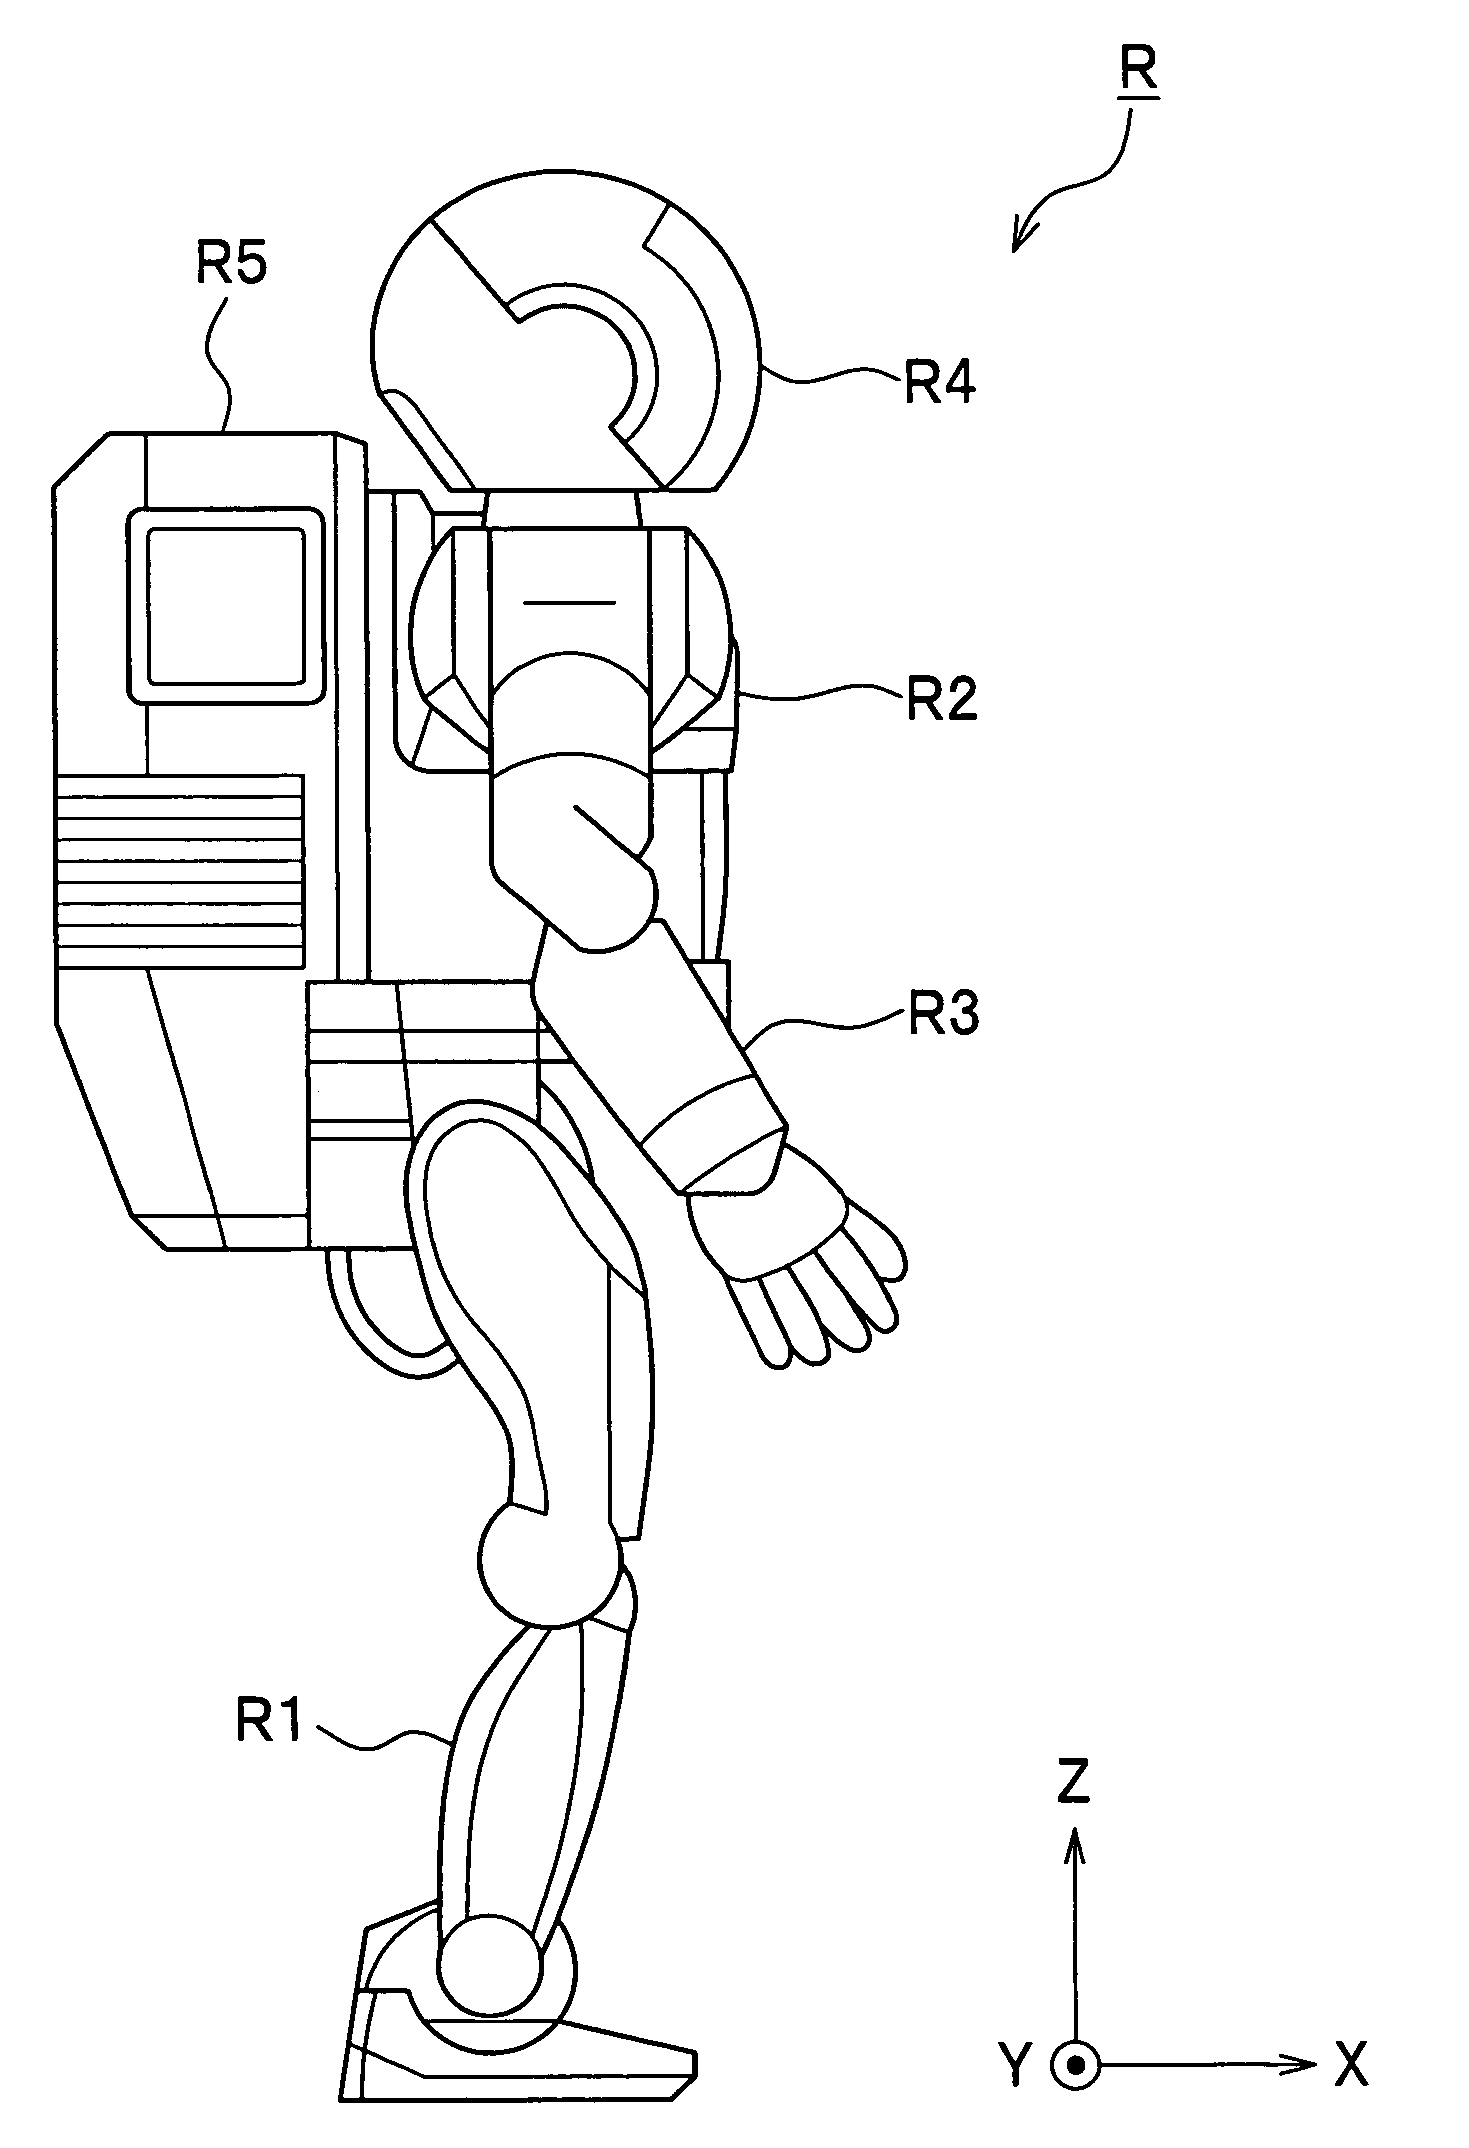 Legged mobile robot controller, legged mobile robot and legged mobile robot control method